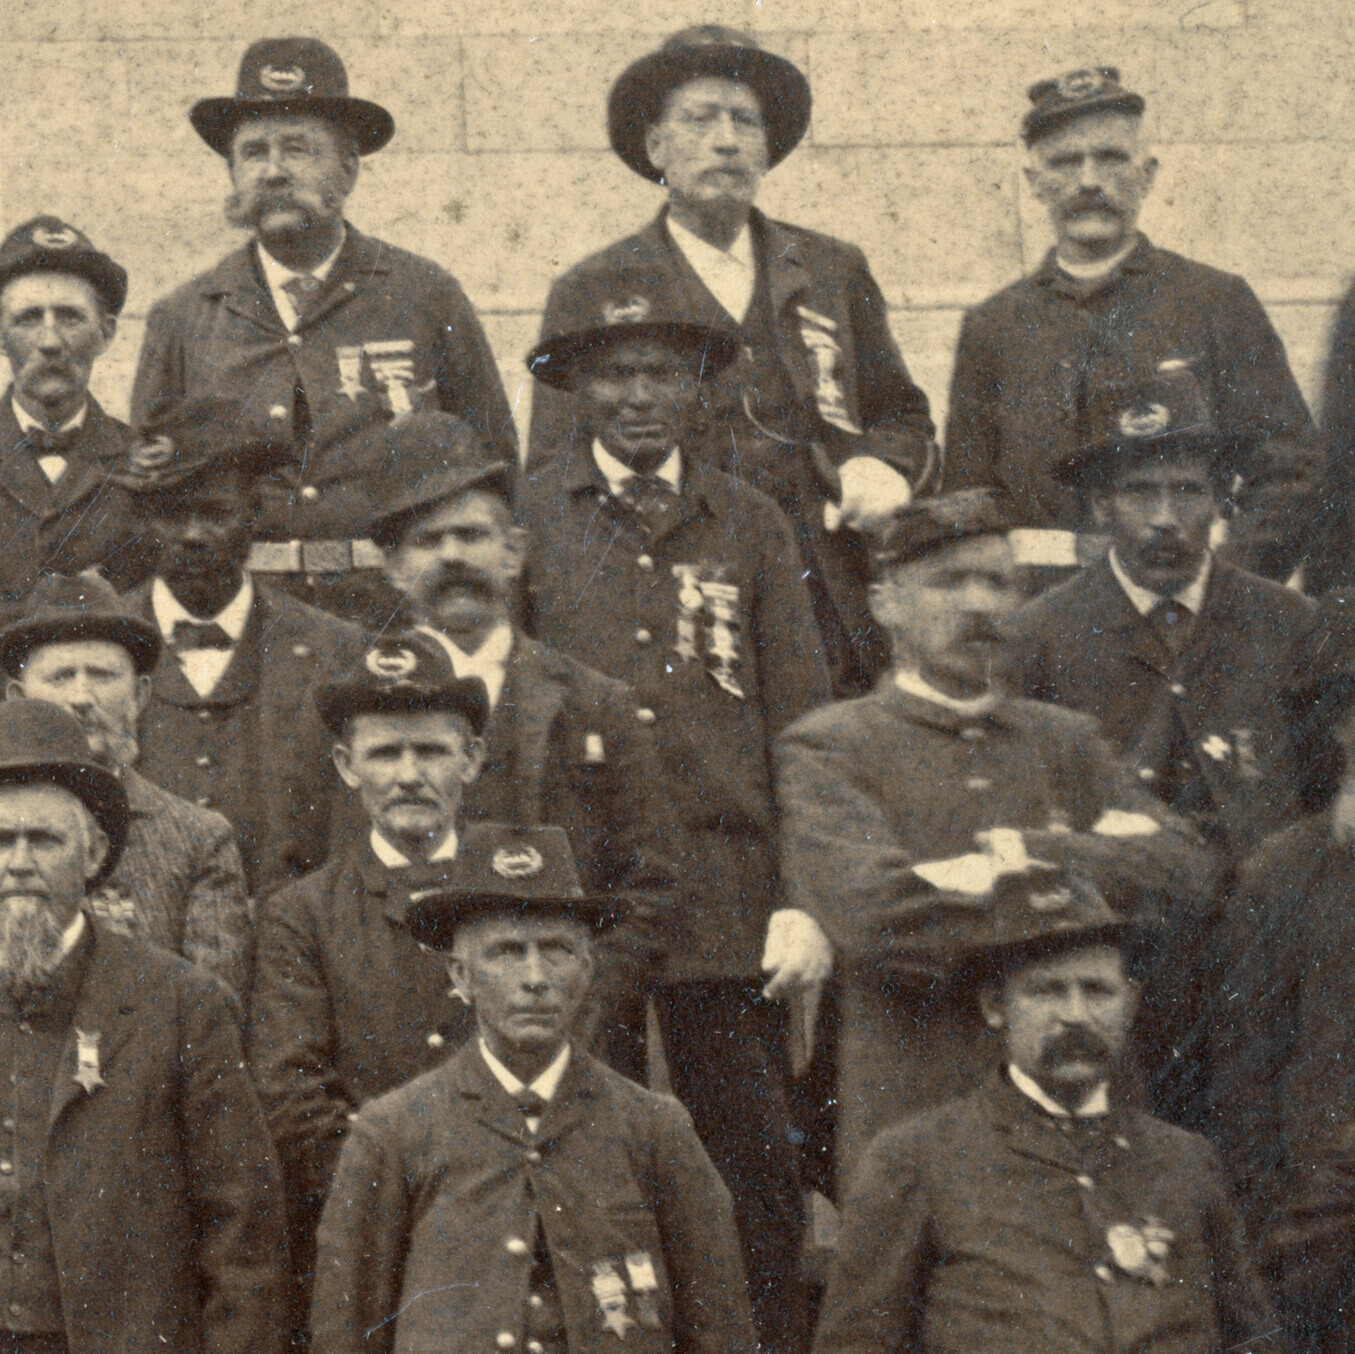 old photo of Civil War veterans in uniform